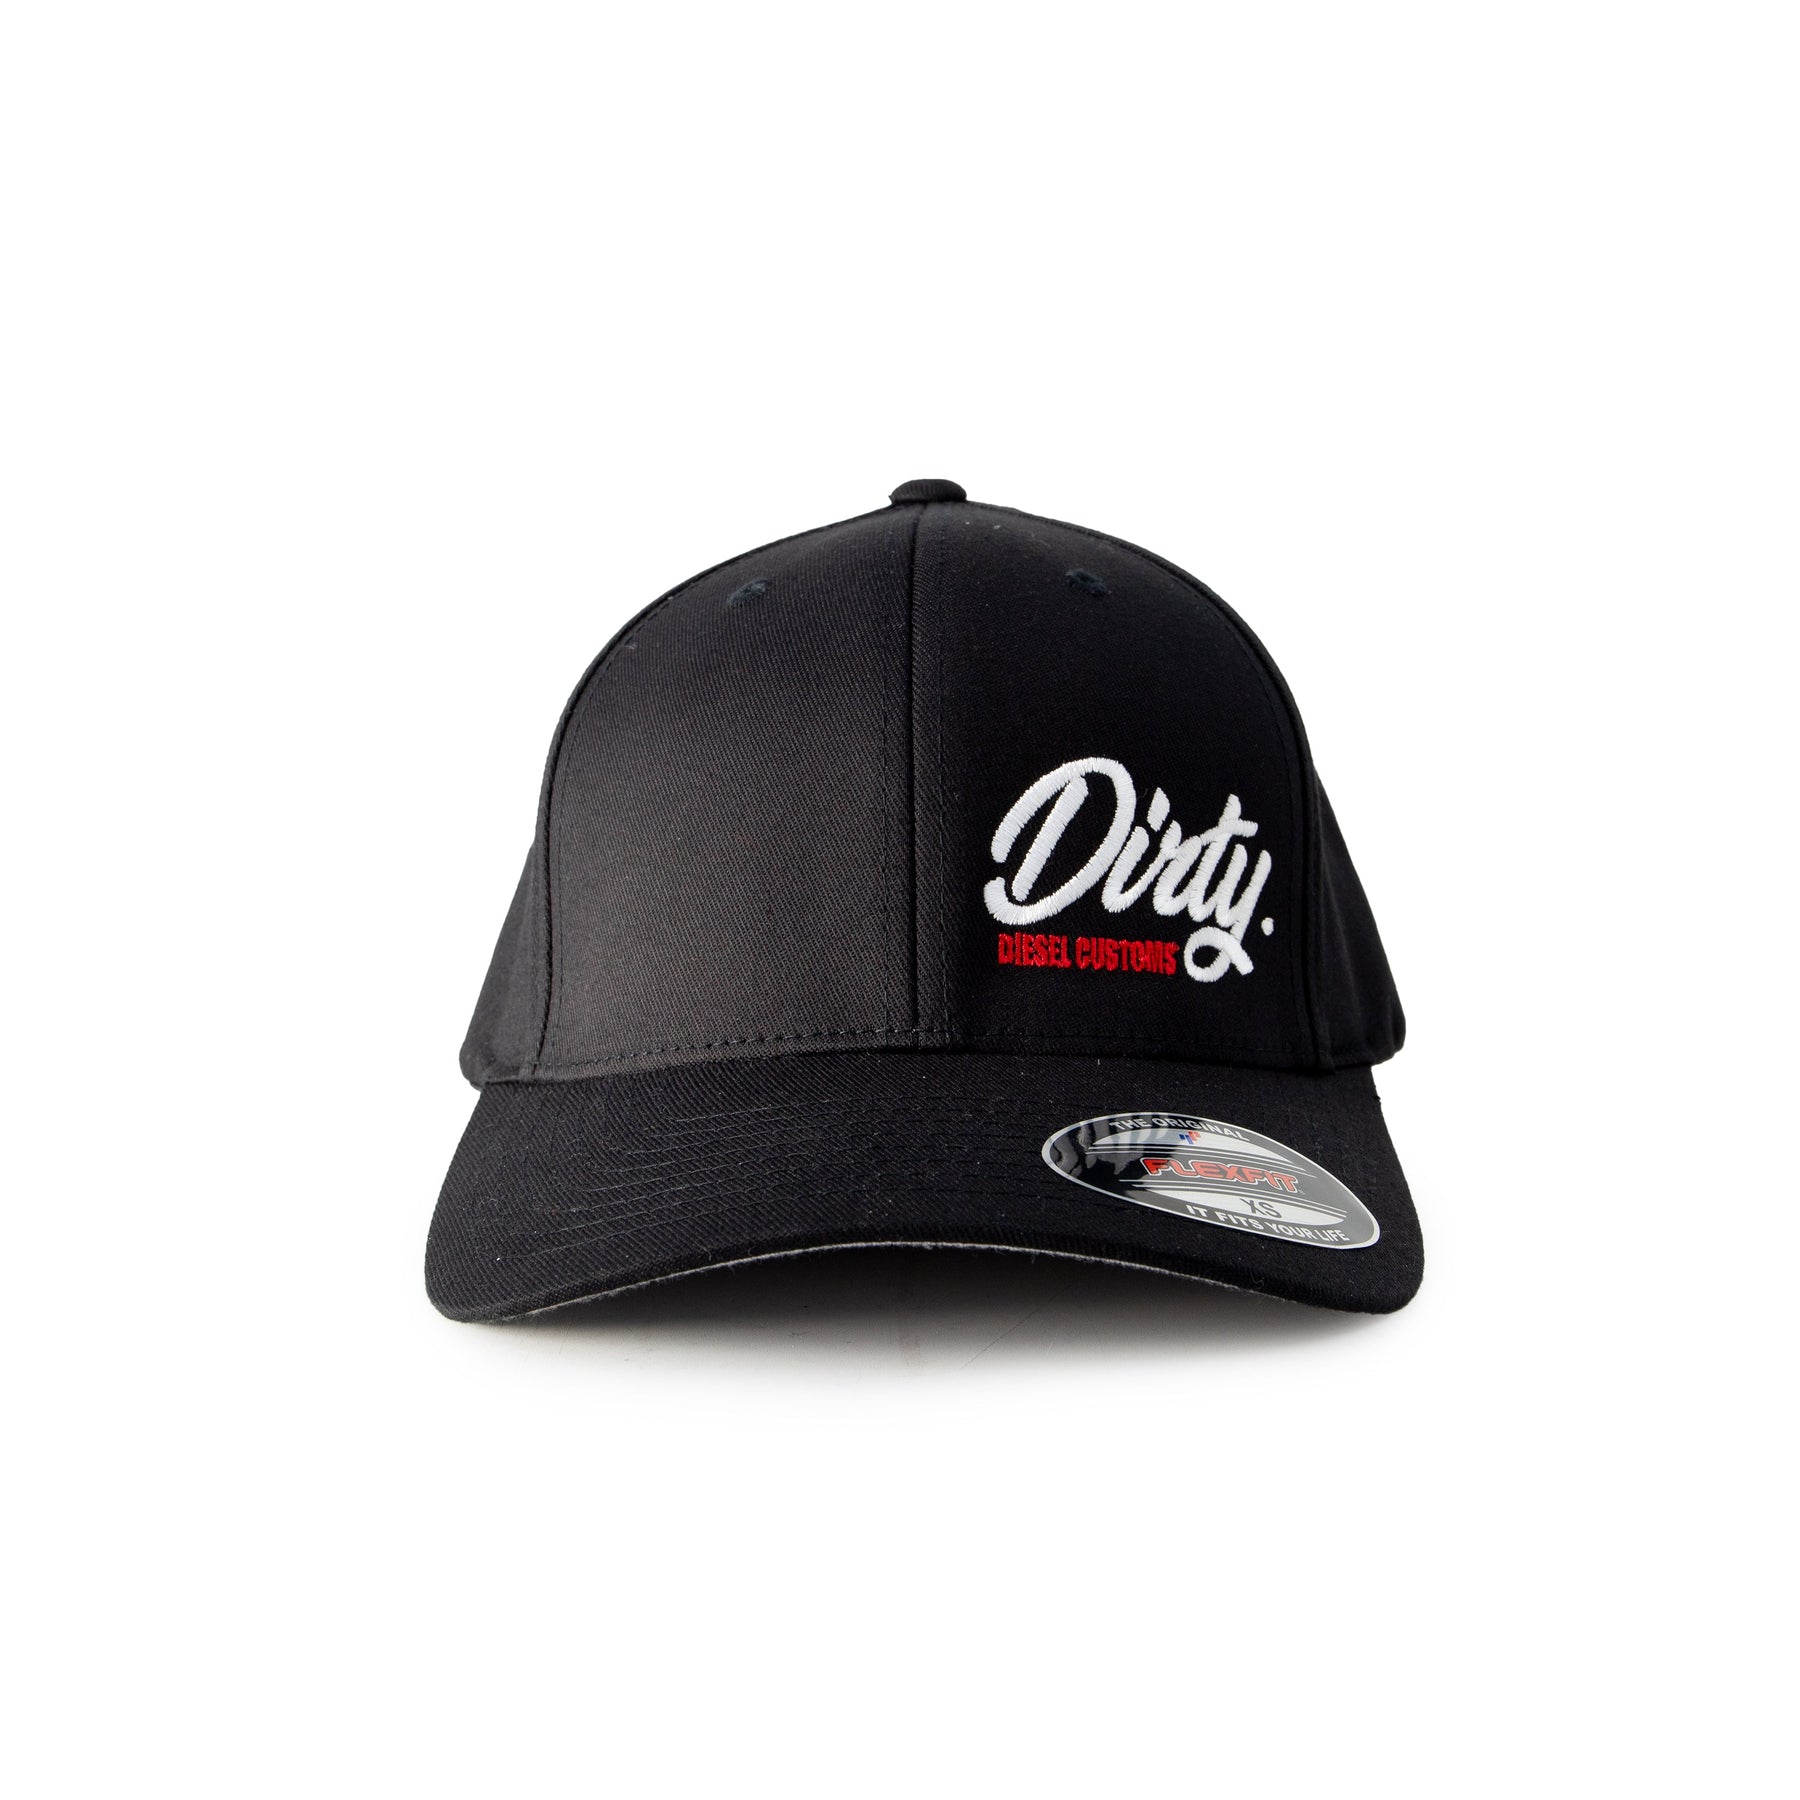 Classic Dirty Hat (Flex-Fit)-Hat-Dirty Diesel Customs-Dirty Diesel Customs